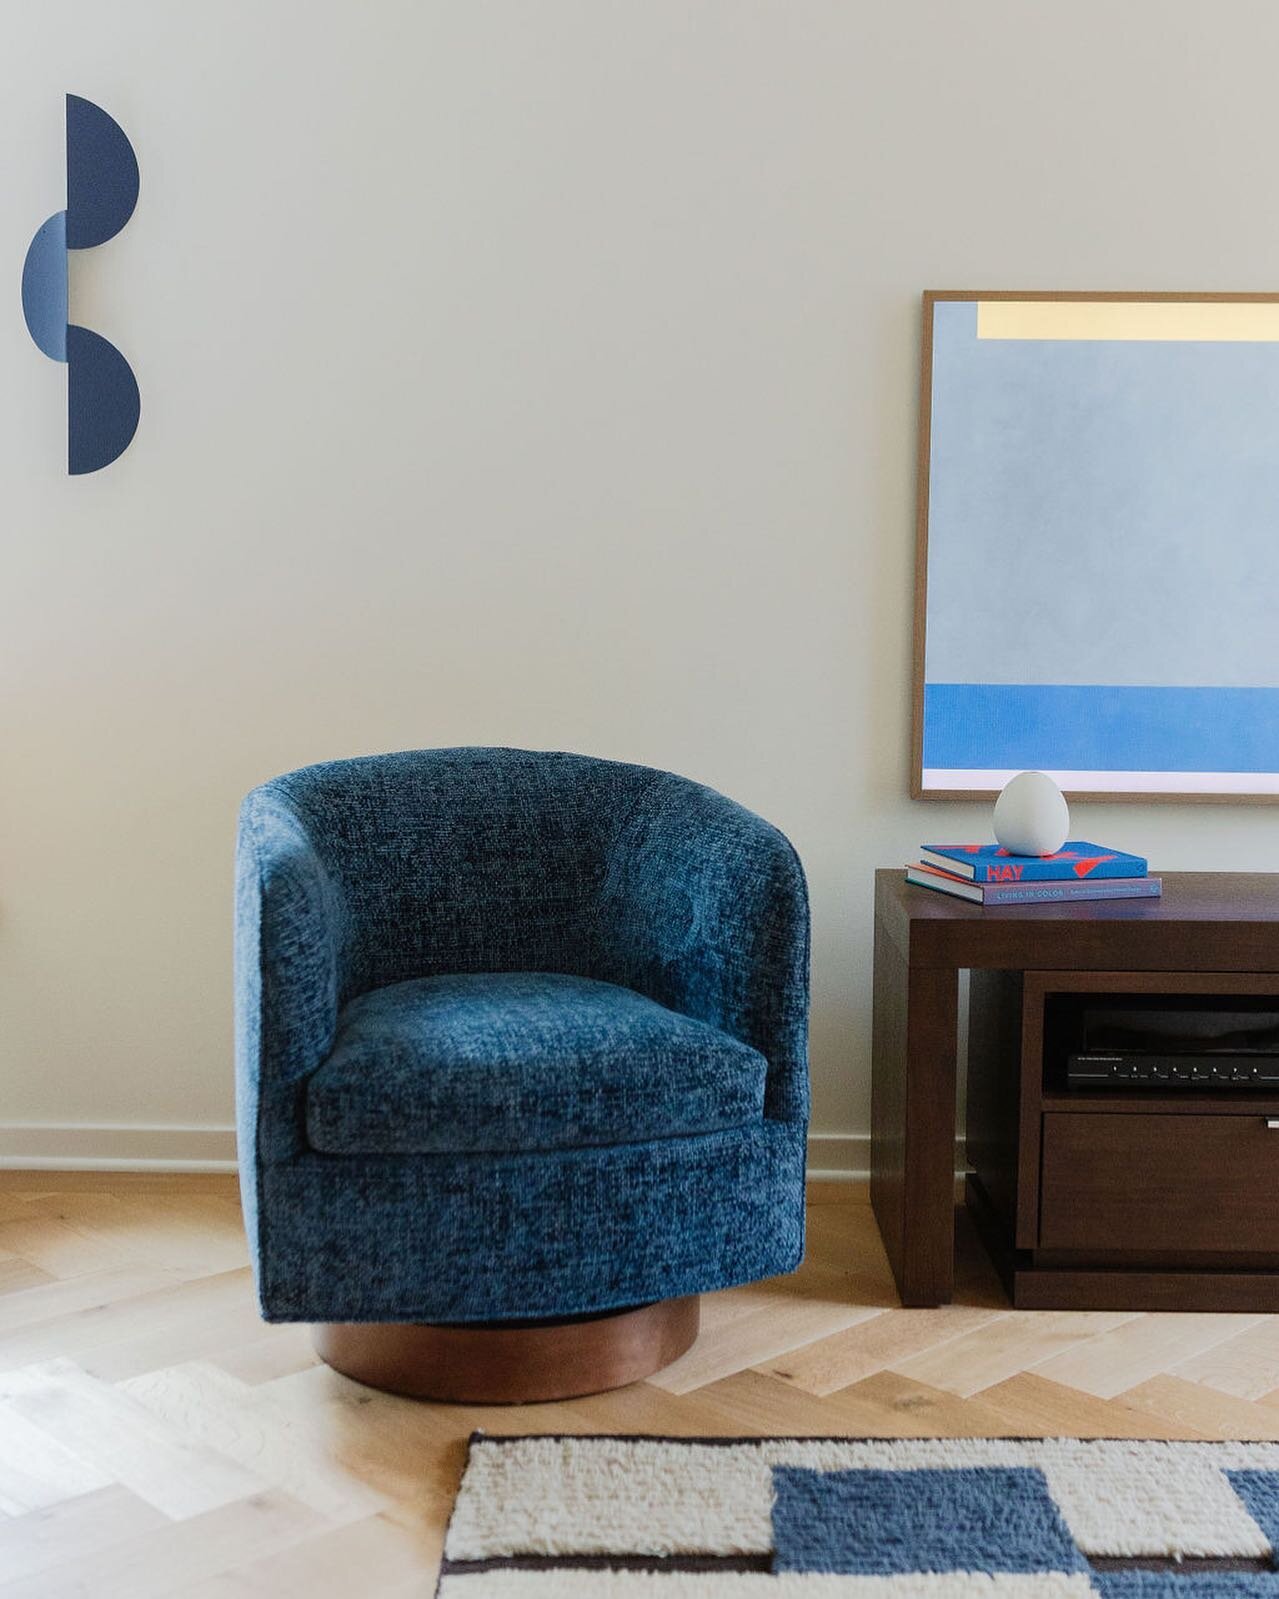 Negative space

Interior Design &amp; Styling by @babbandmackdesignco 
Construction by @pittsburghremodeling 
Photo by @katelynrosefoto 

#pittsburghdesign 
#pittsburghinteriordesign 
#pittsburghrenovation 
#familyroomdesign 
#interiorstyling
#family